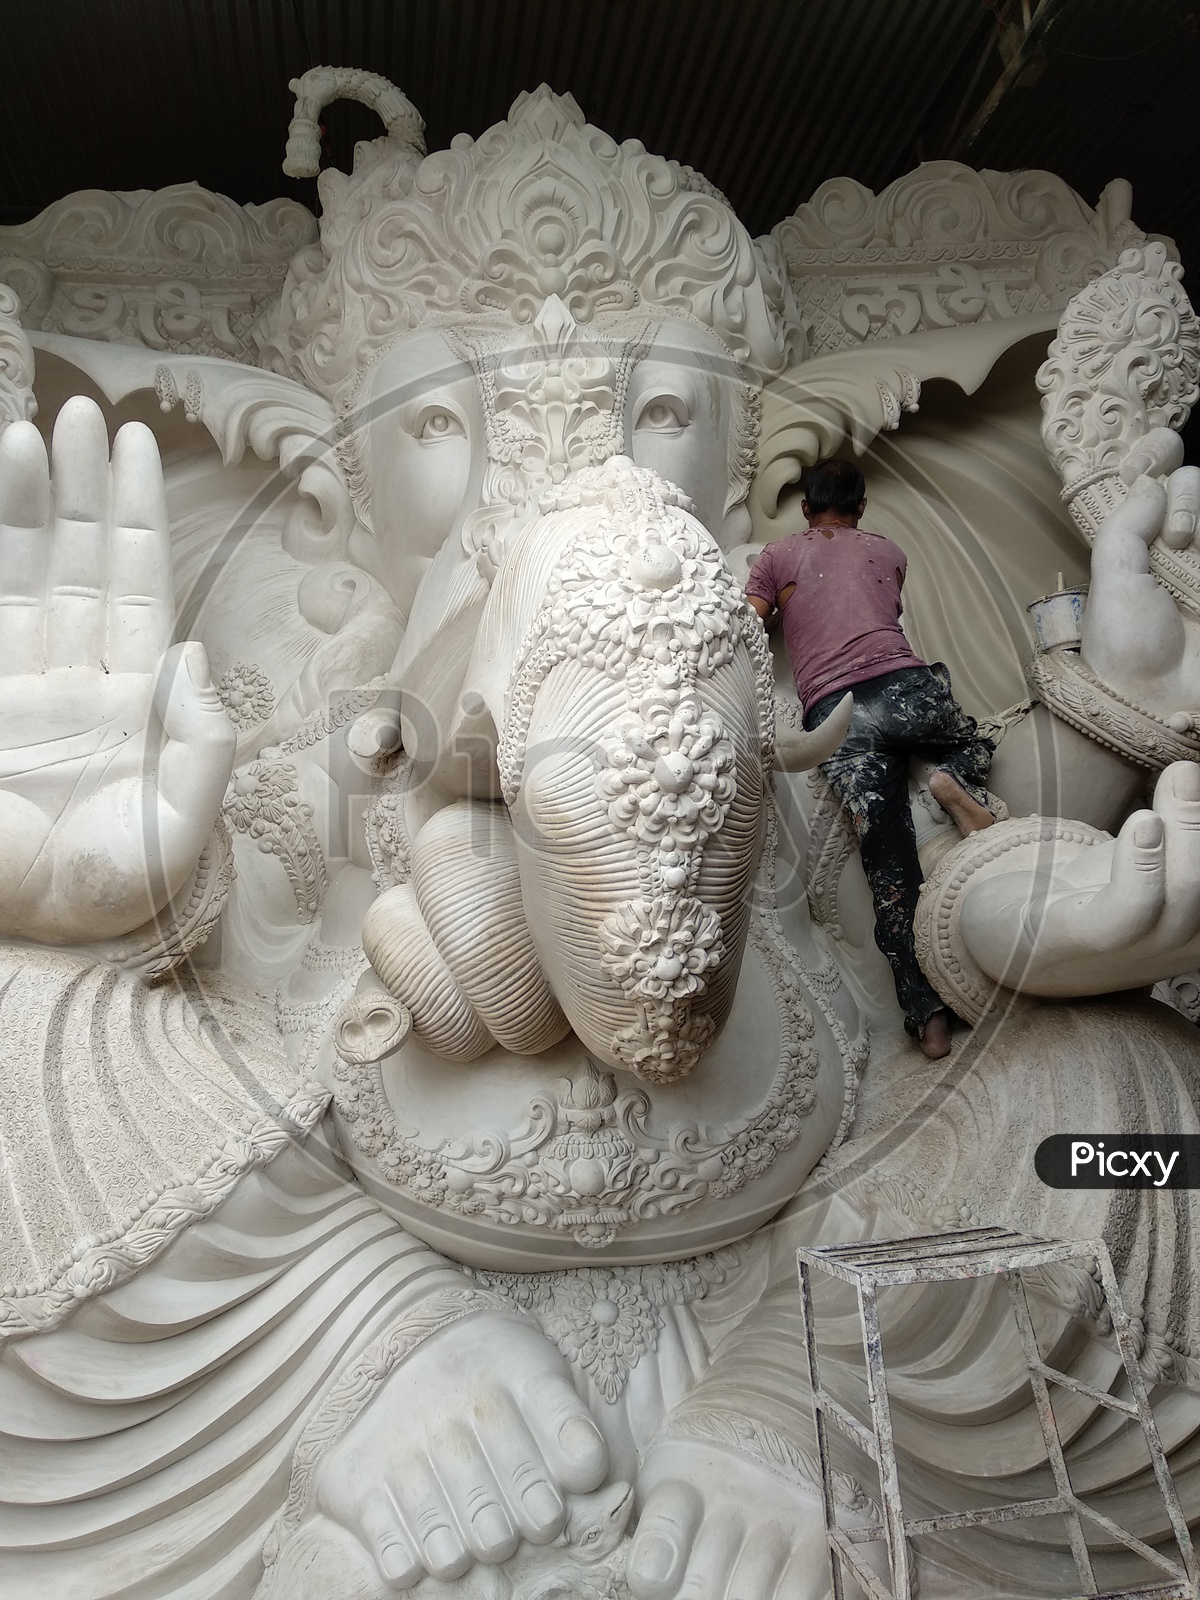 Ganesh idol making at Dhoolpet, A Man doing Finishing the Idol